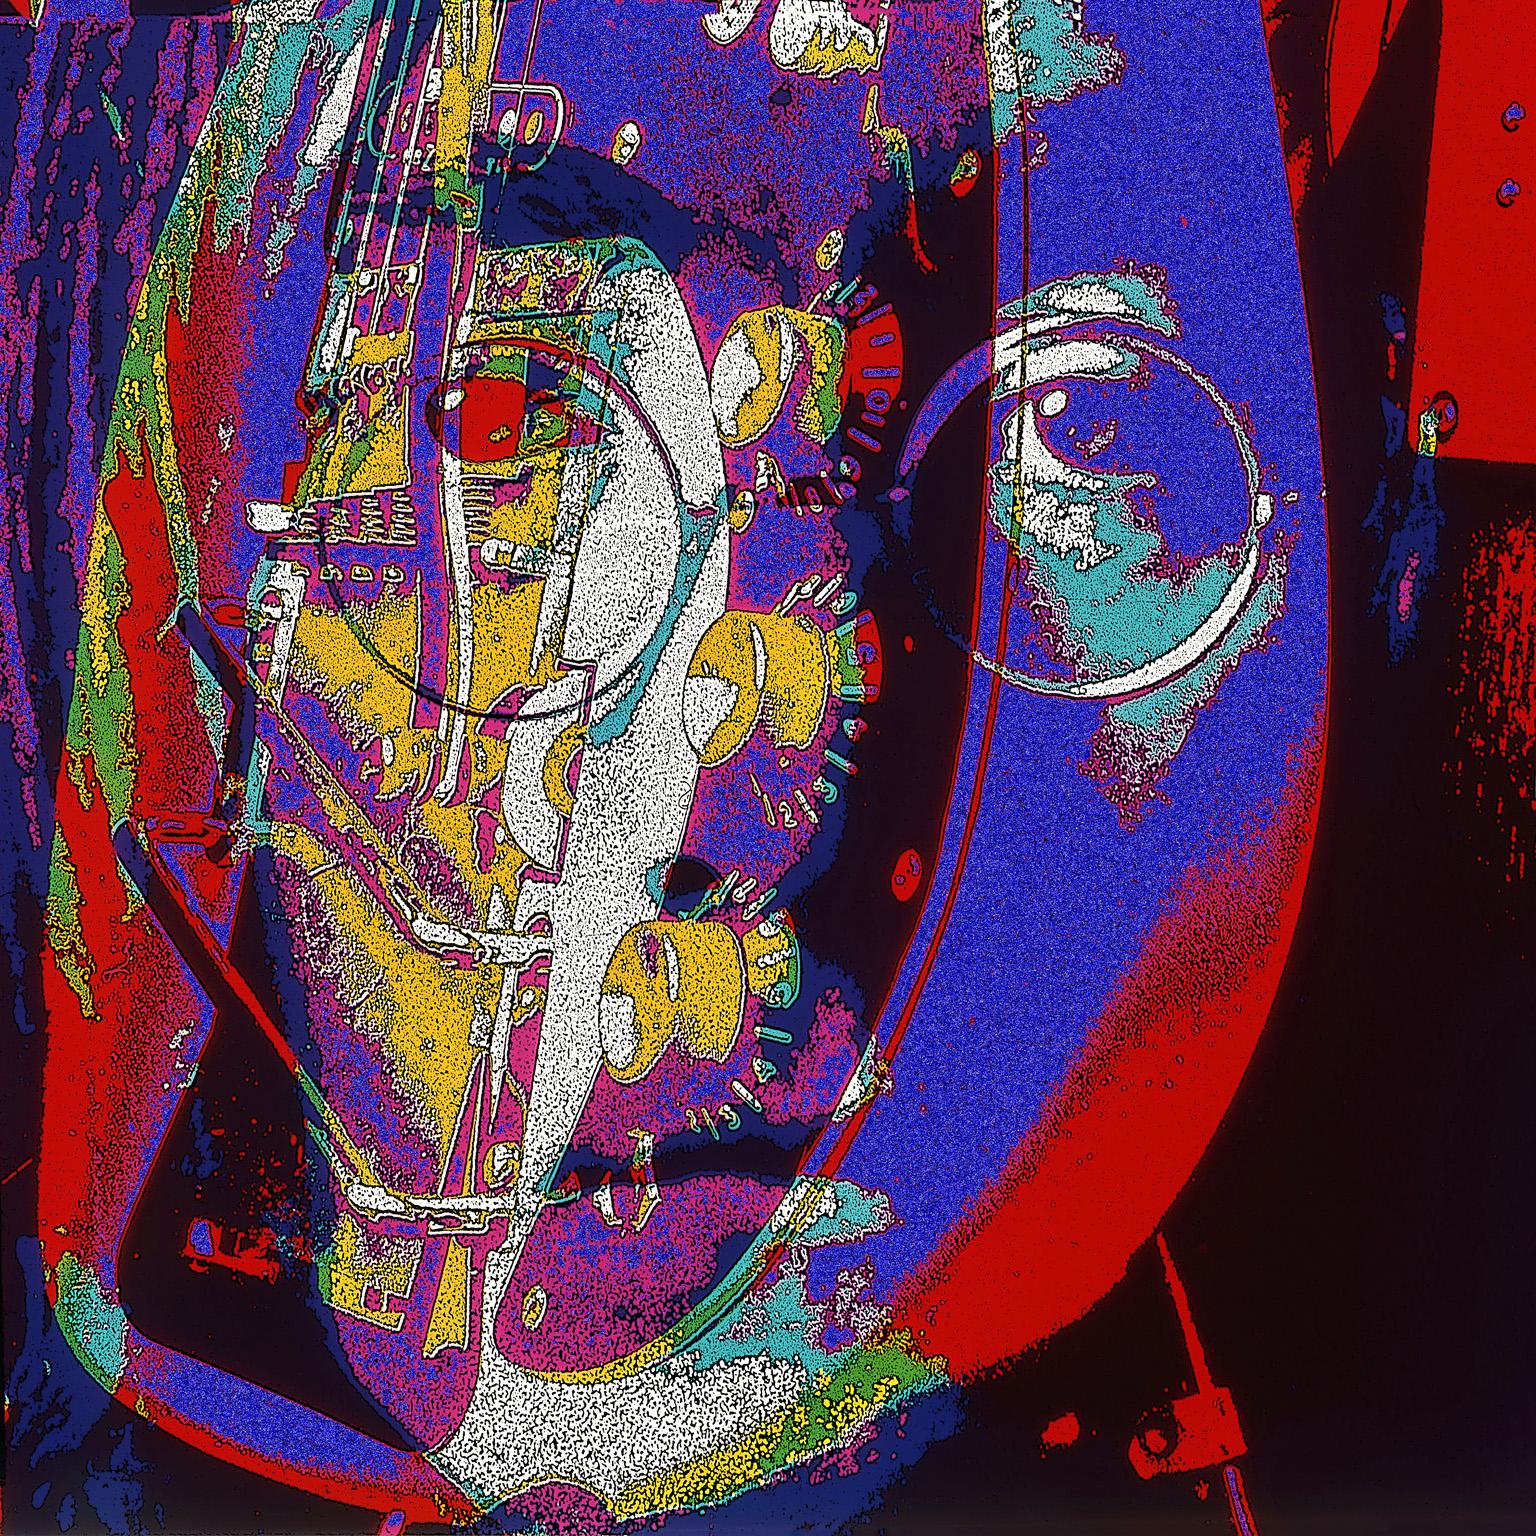 John Lennon - Beatles, Pop Art, en rouge, violet et jaune